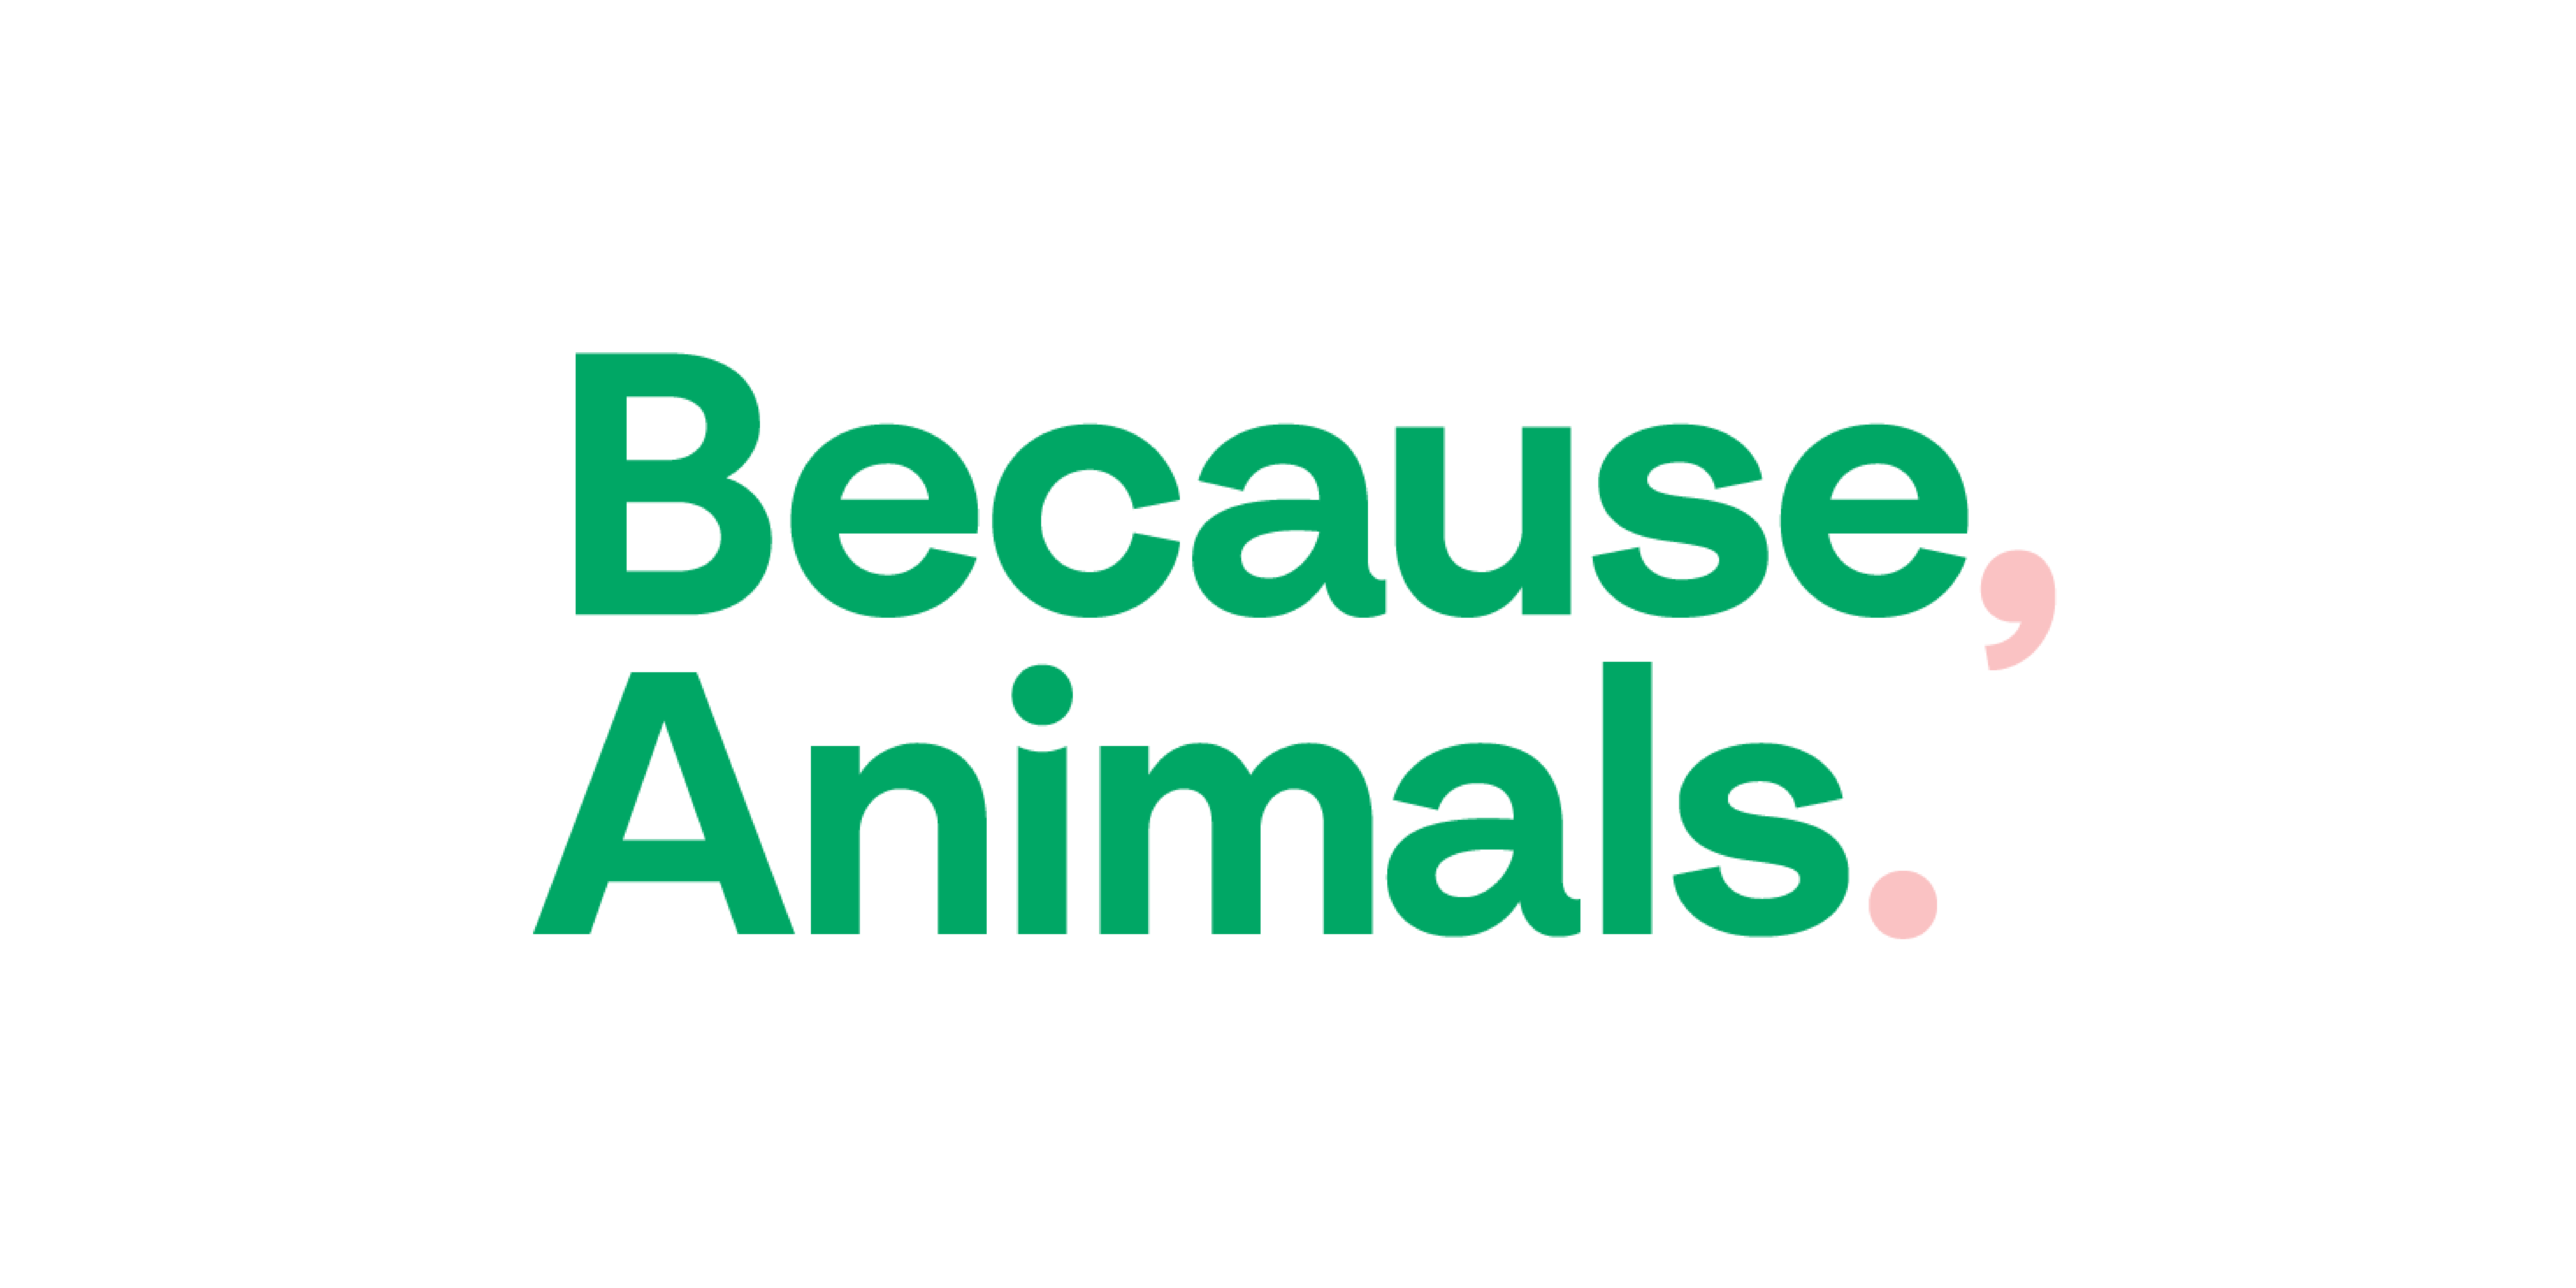 Because Animals